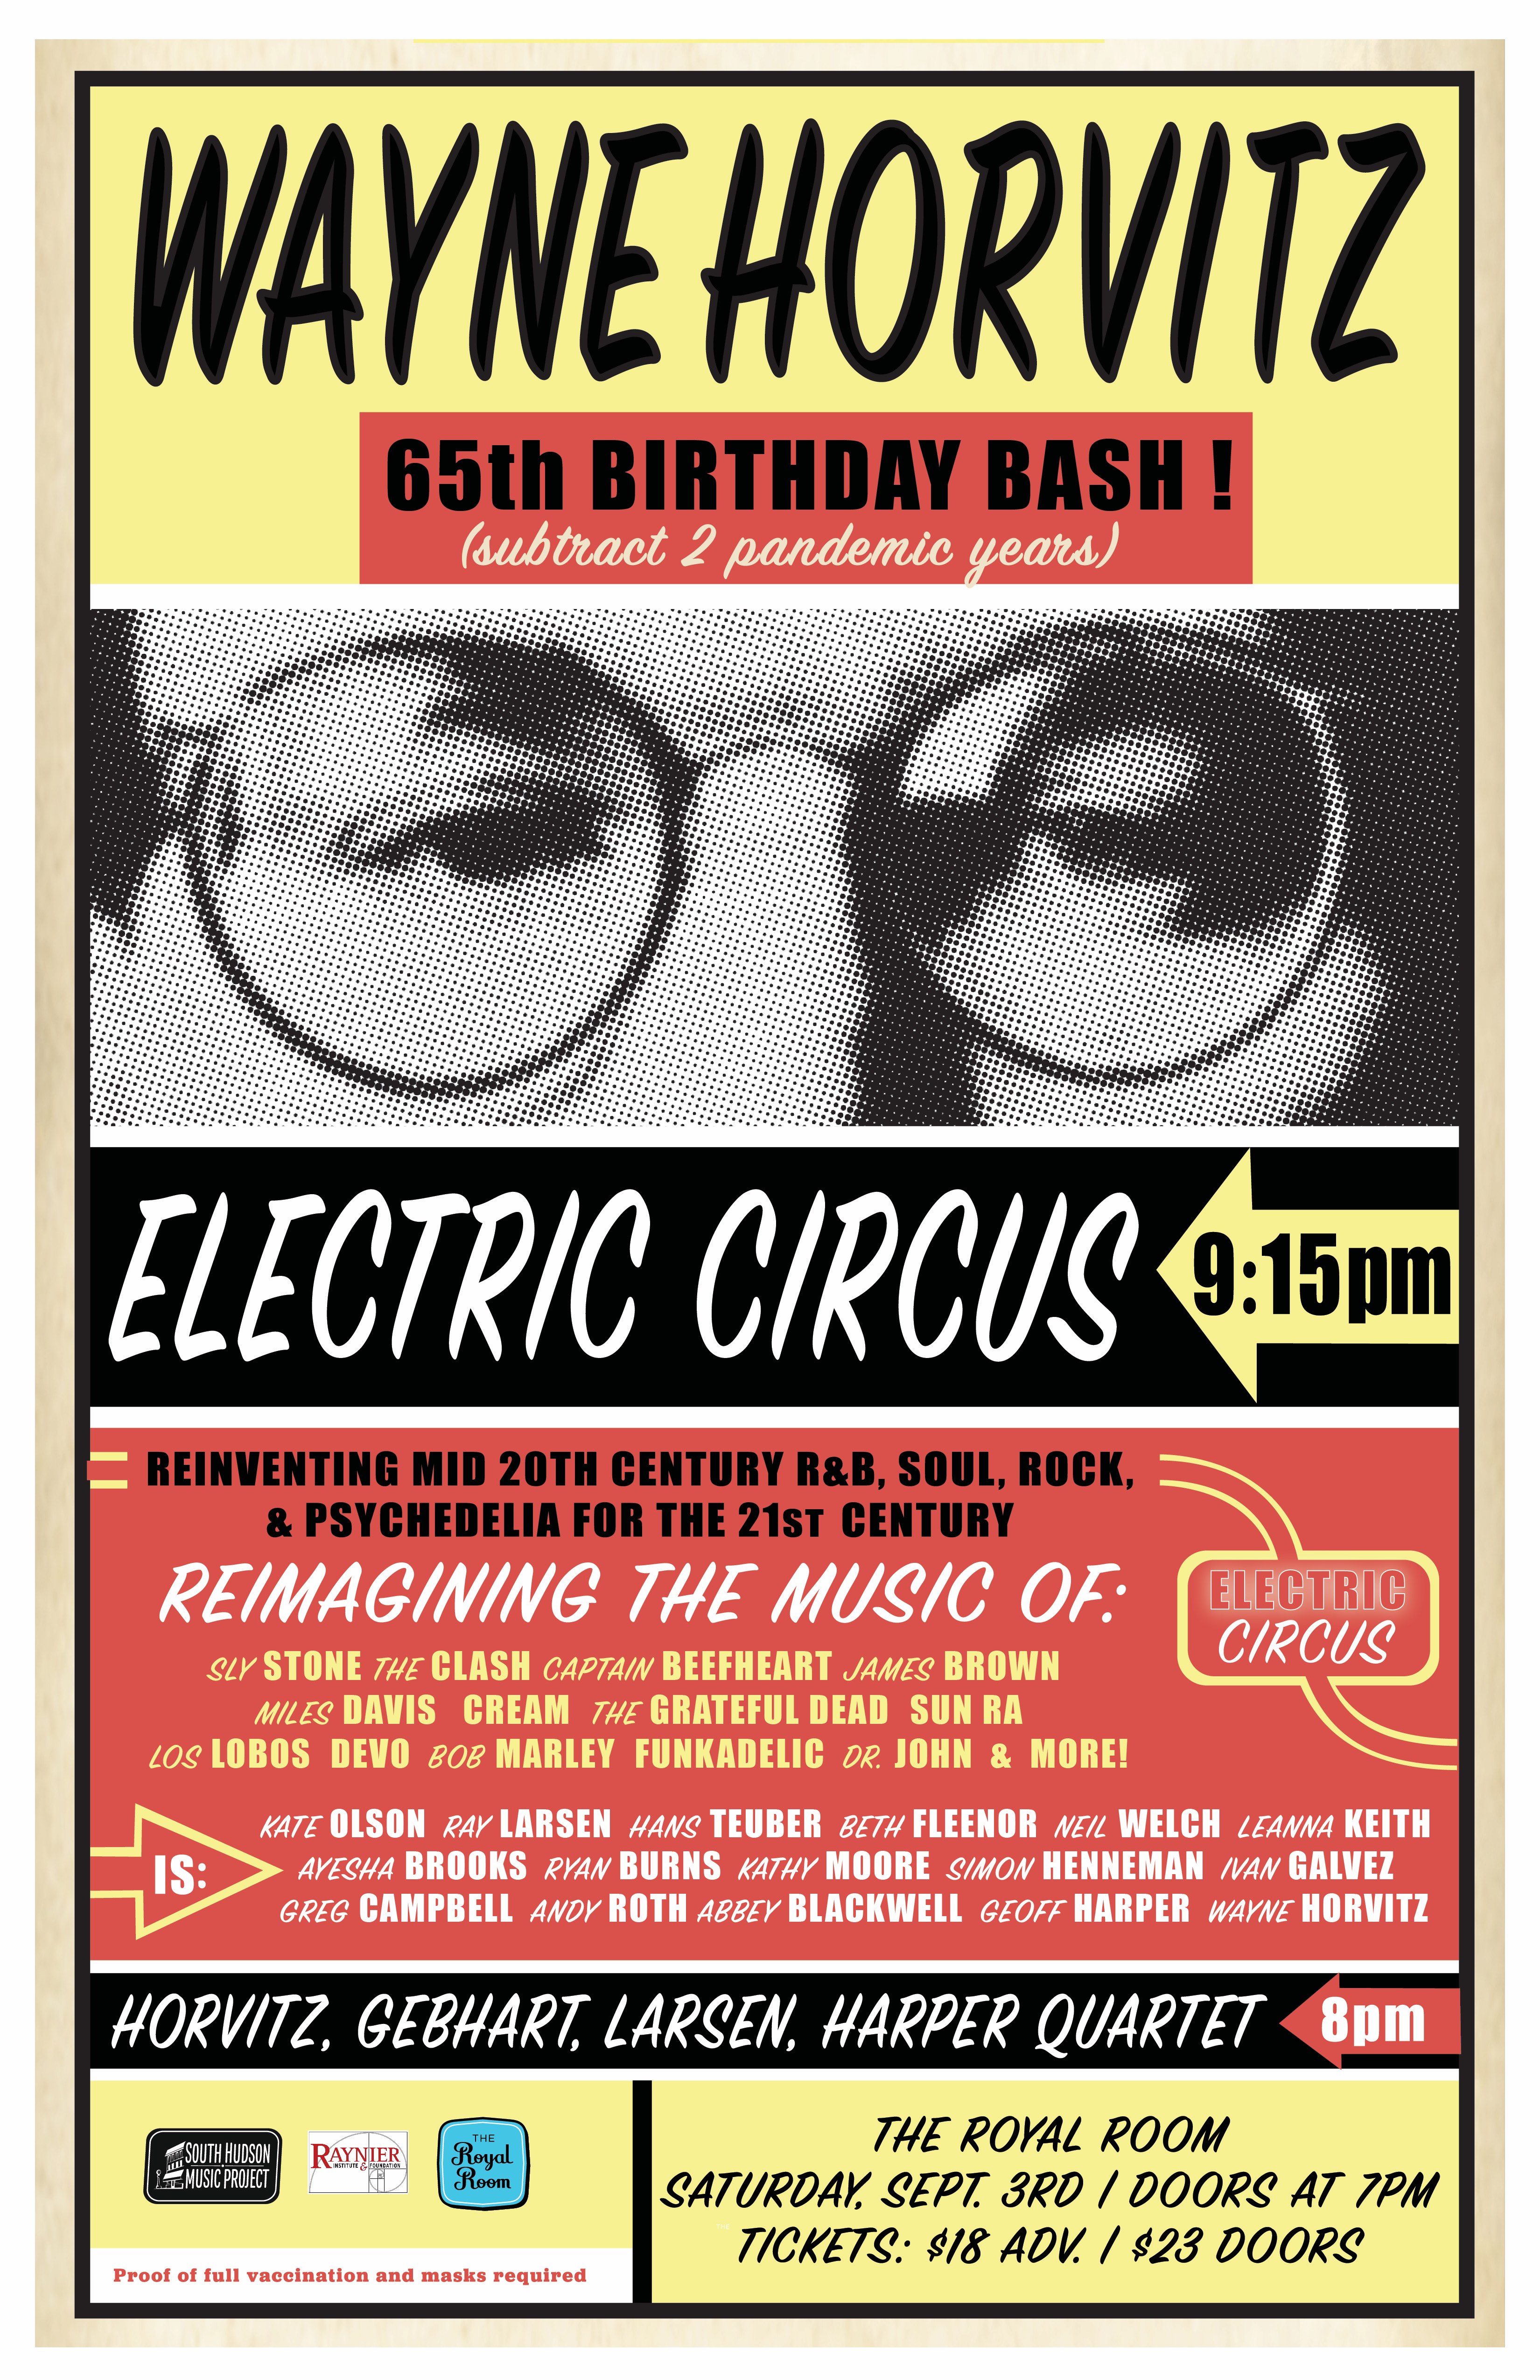 Wayne Horvitz 65th Birthday Bashes (Minus Two Pandemic Years): Electric Circus//Horvitz, Gebhart, Larsen, Harper Quartet